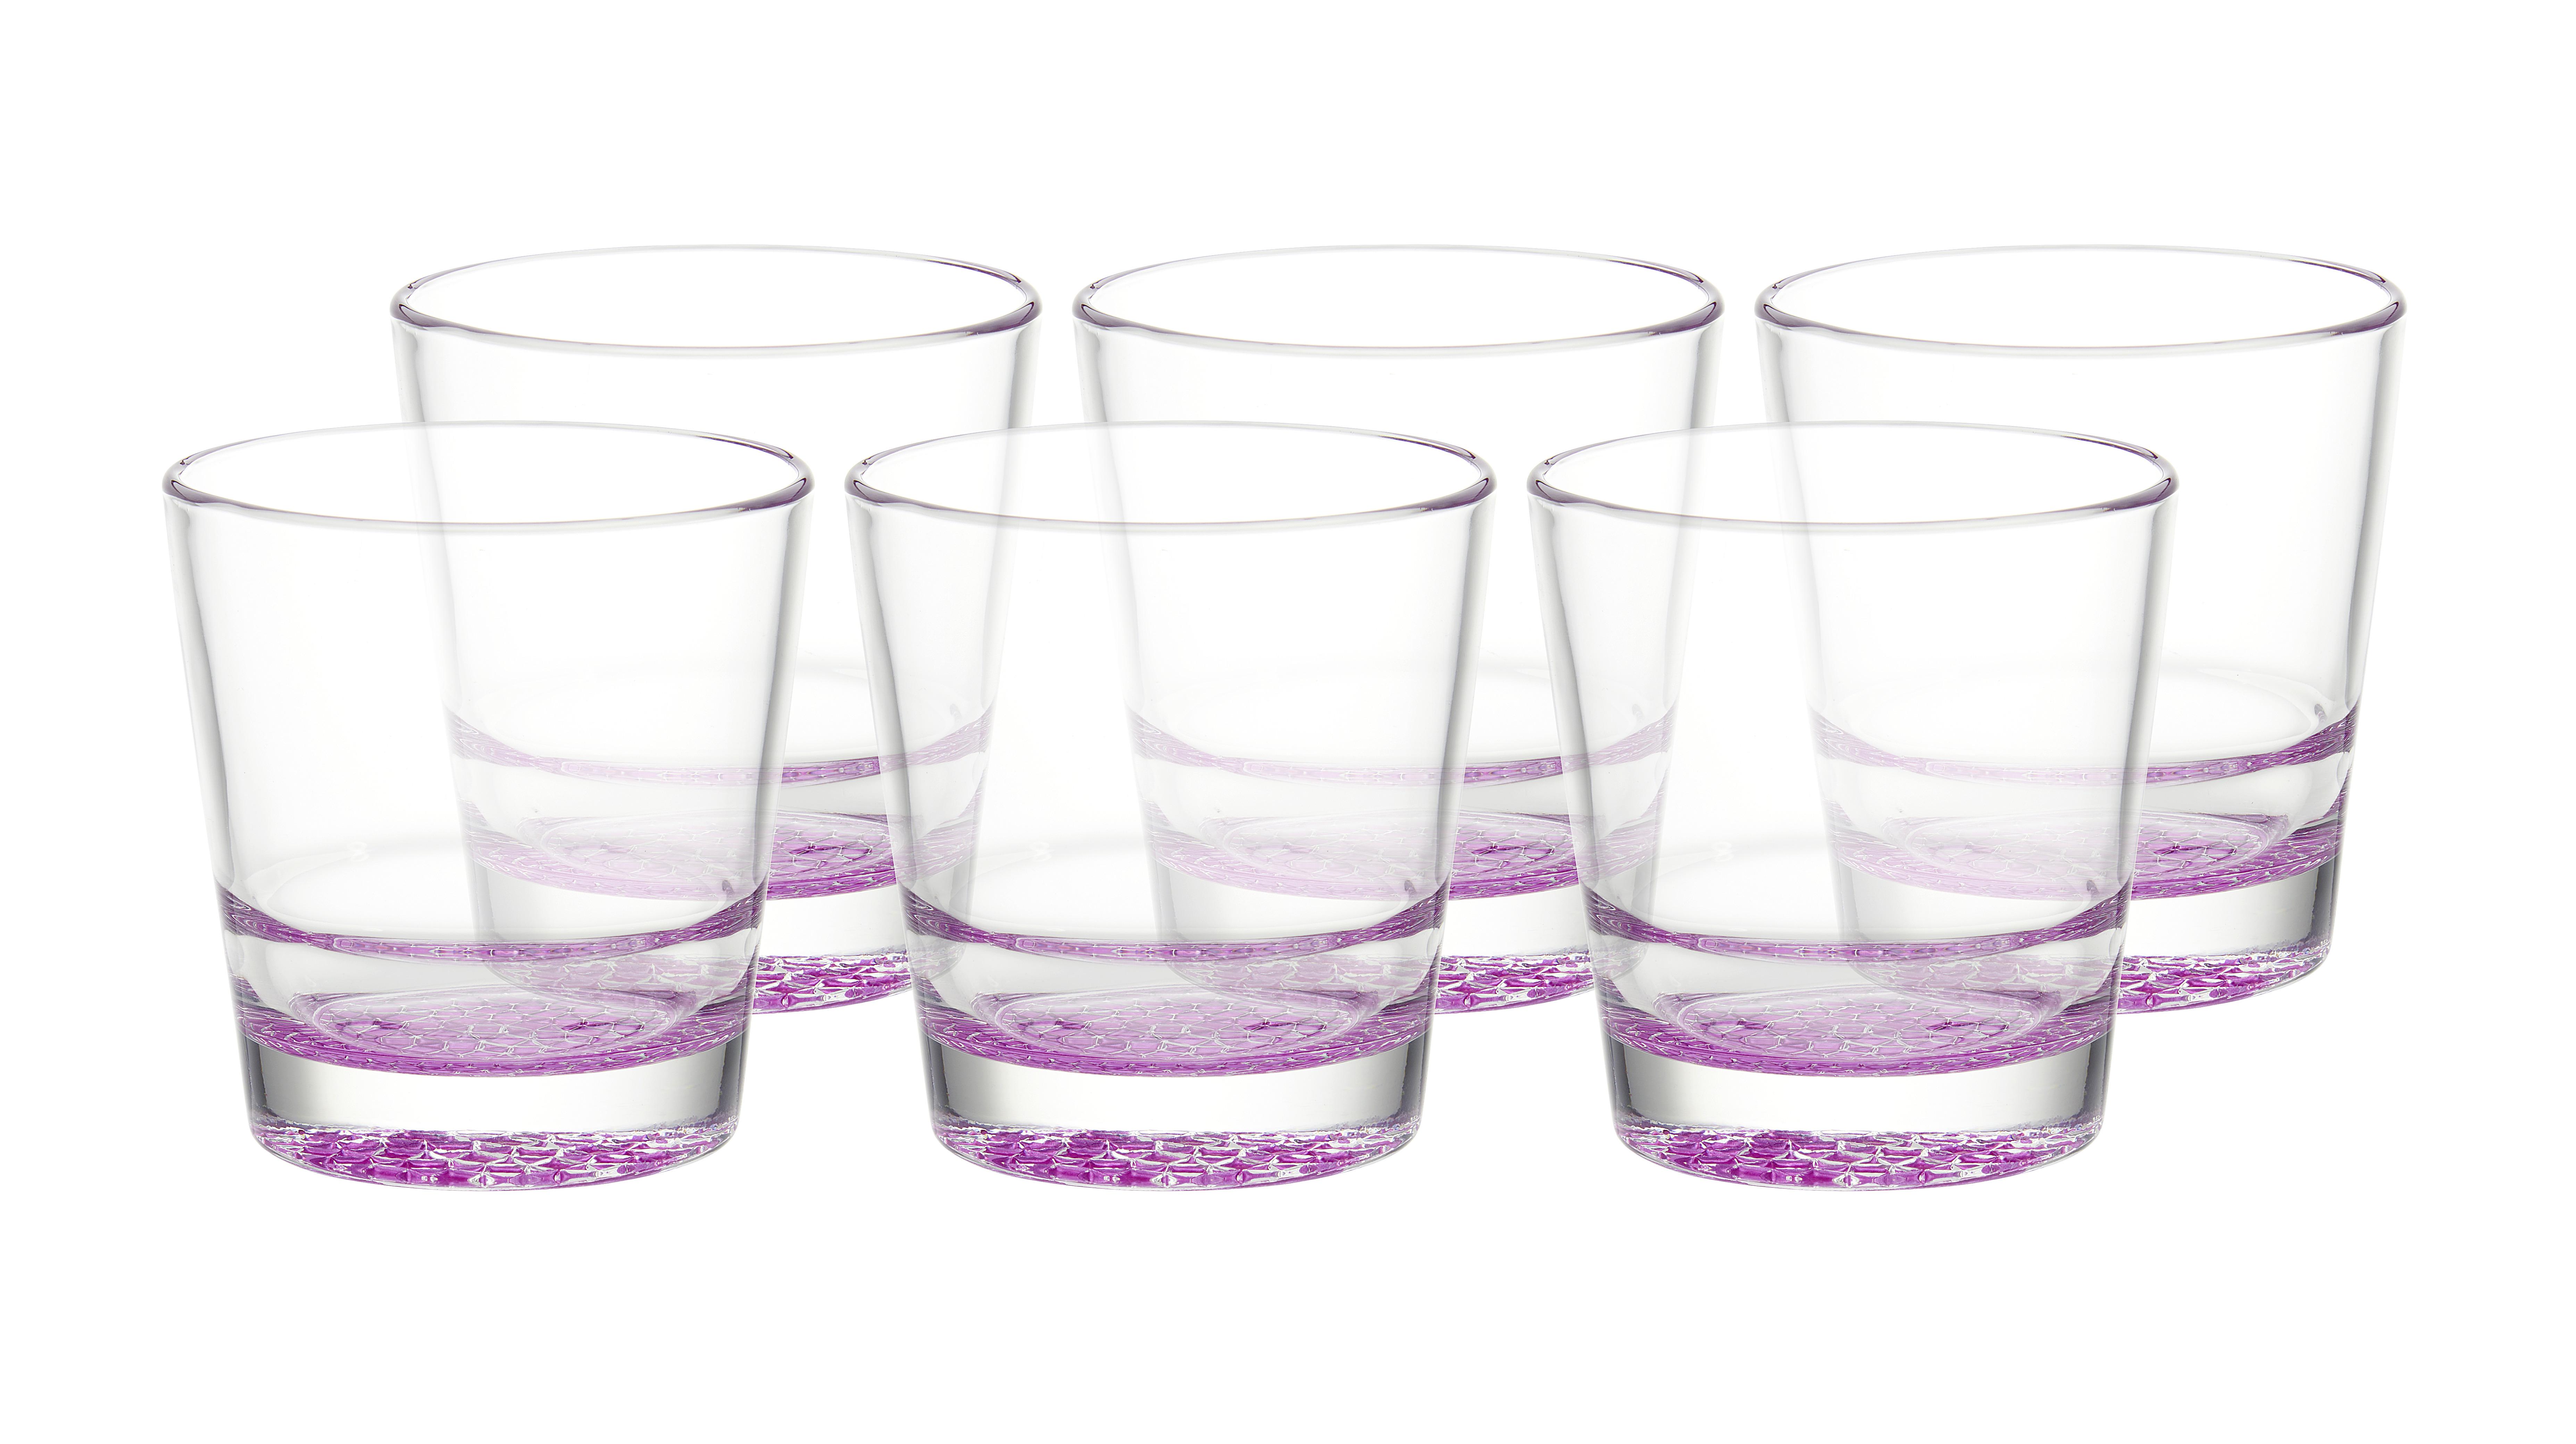 Gläserset Adorno in Rosa, 6-teilig - Pink, MODERN, Glas (400ml) - Bessagi Home